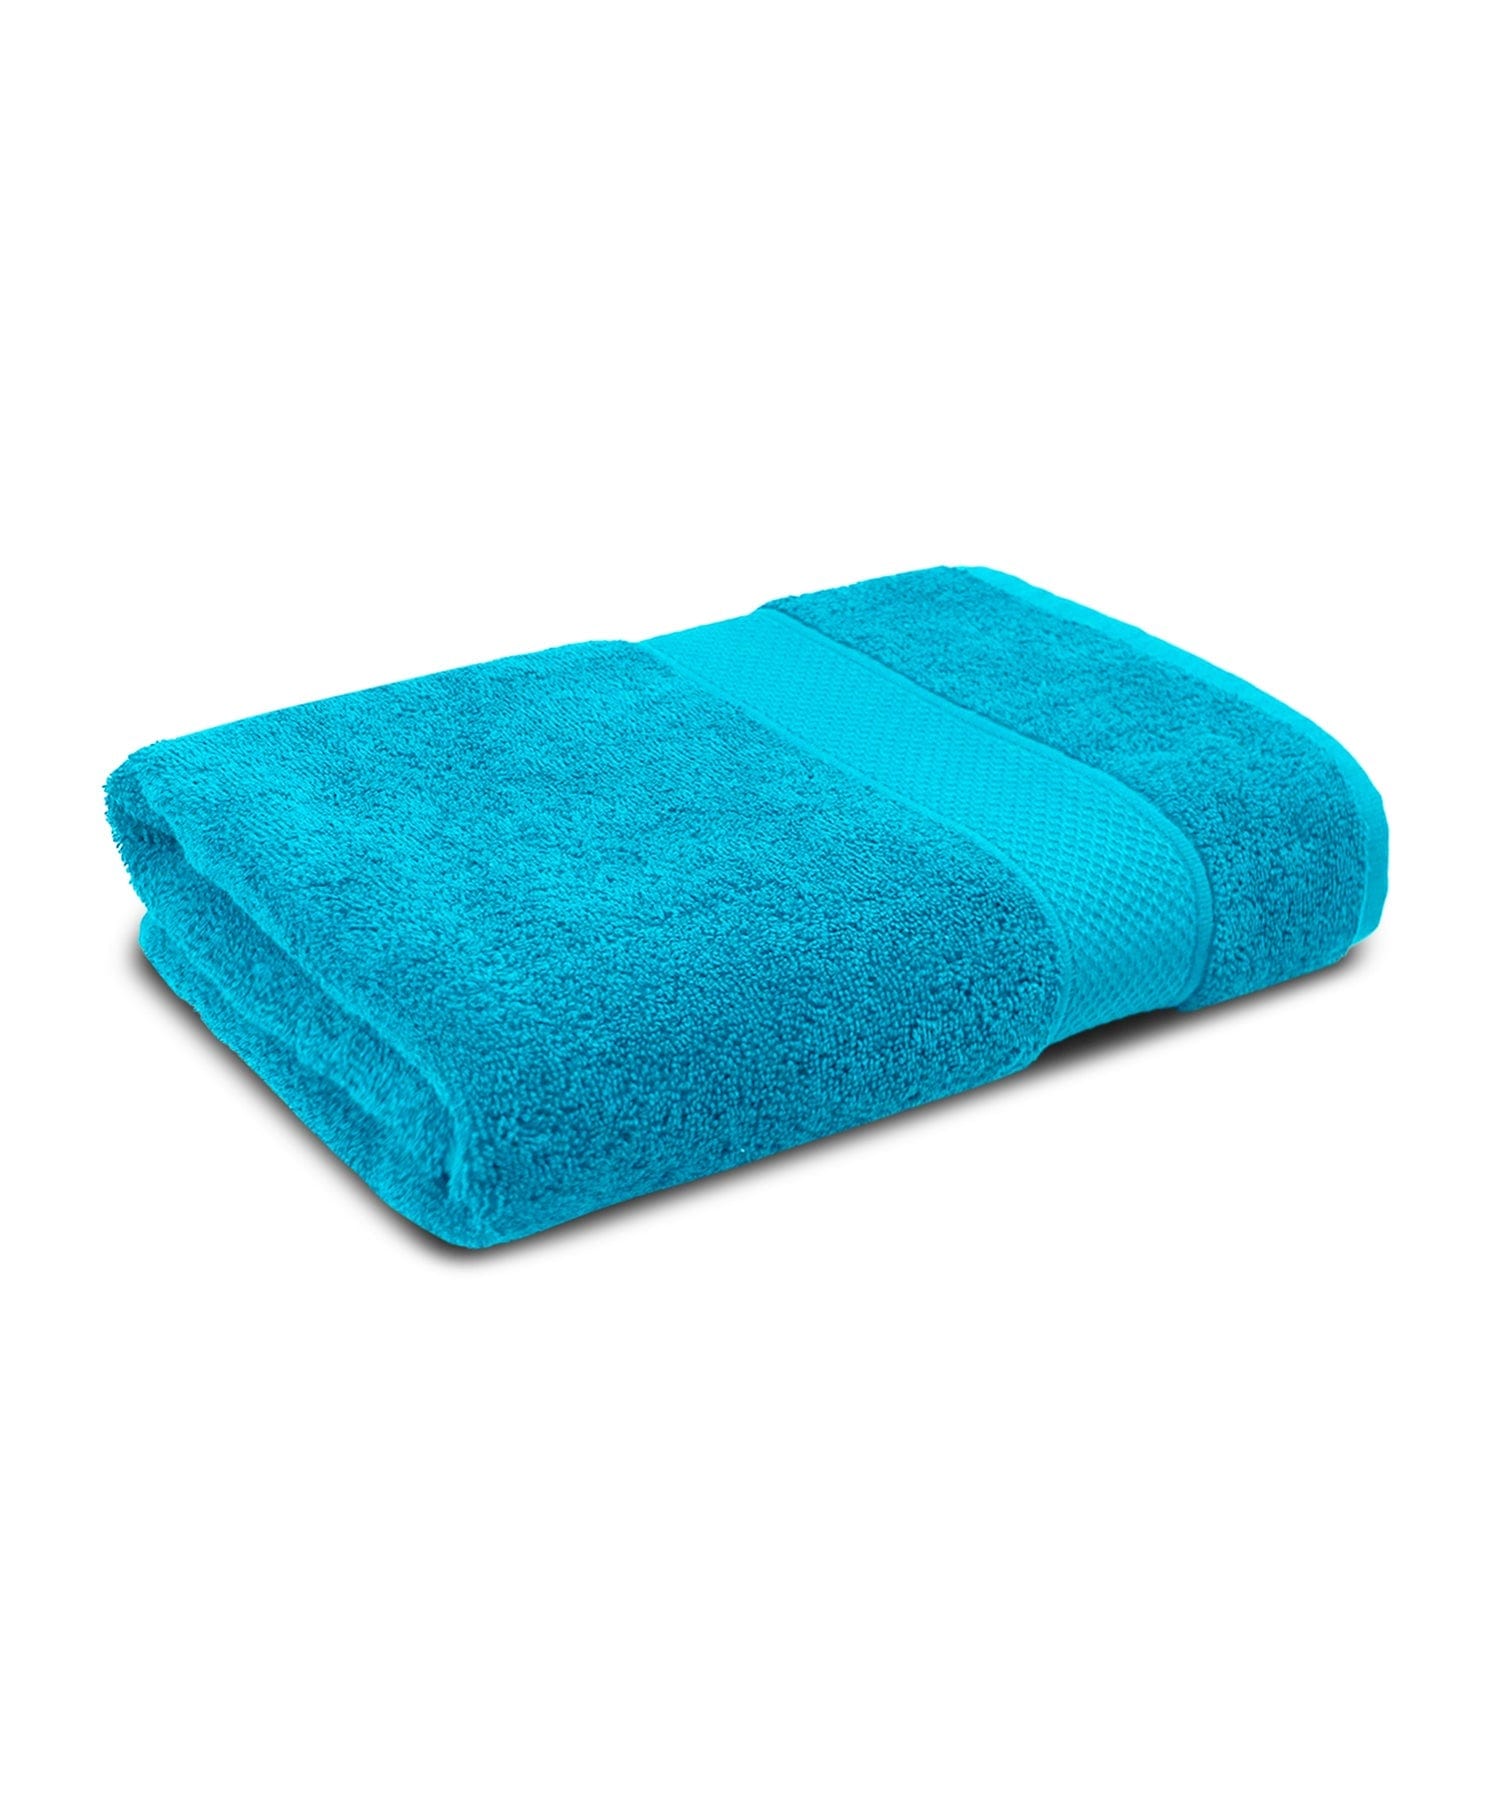 Bath Towel ₹499/-